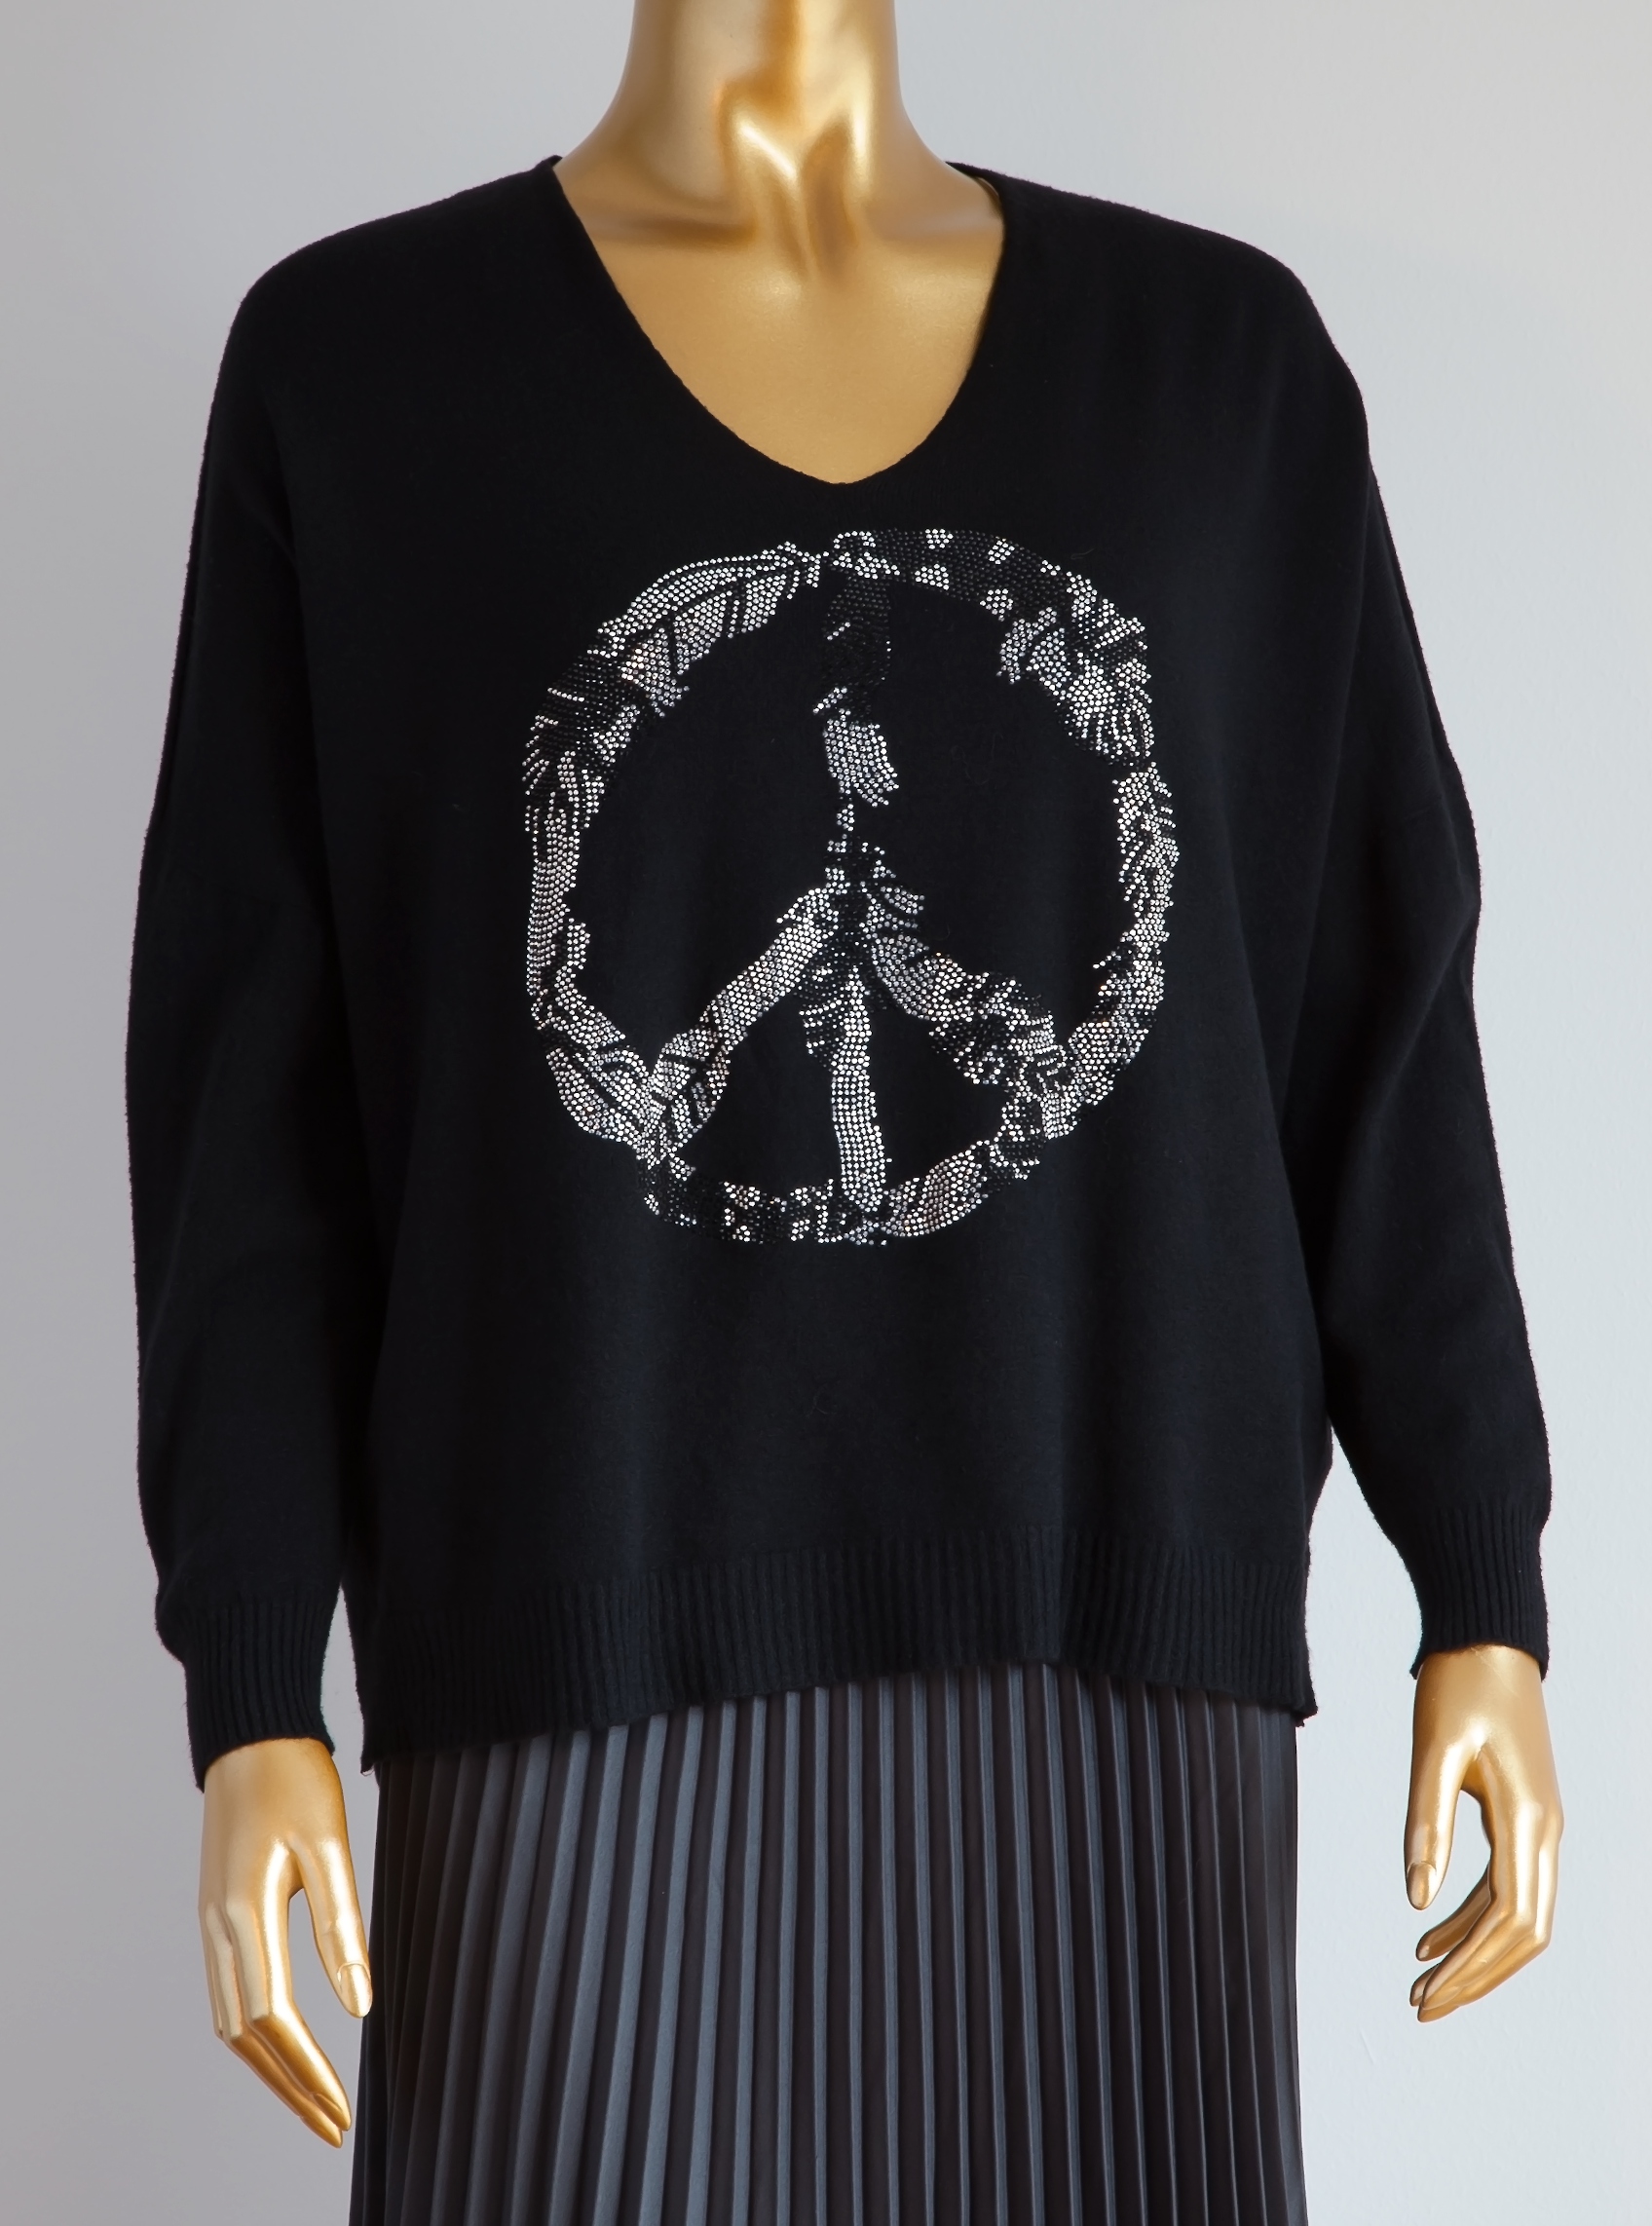 Peace-Pullover von M M Muenchen